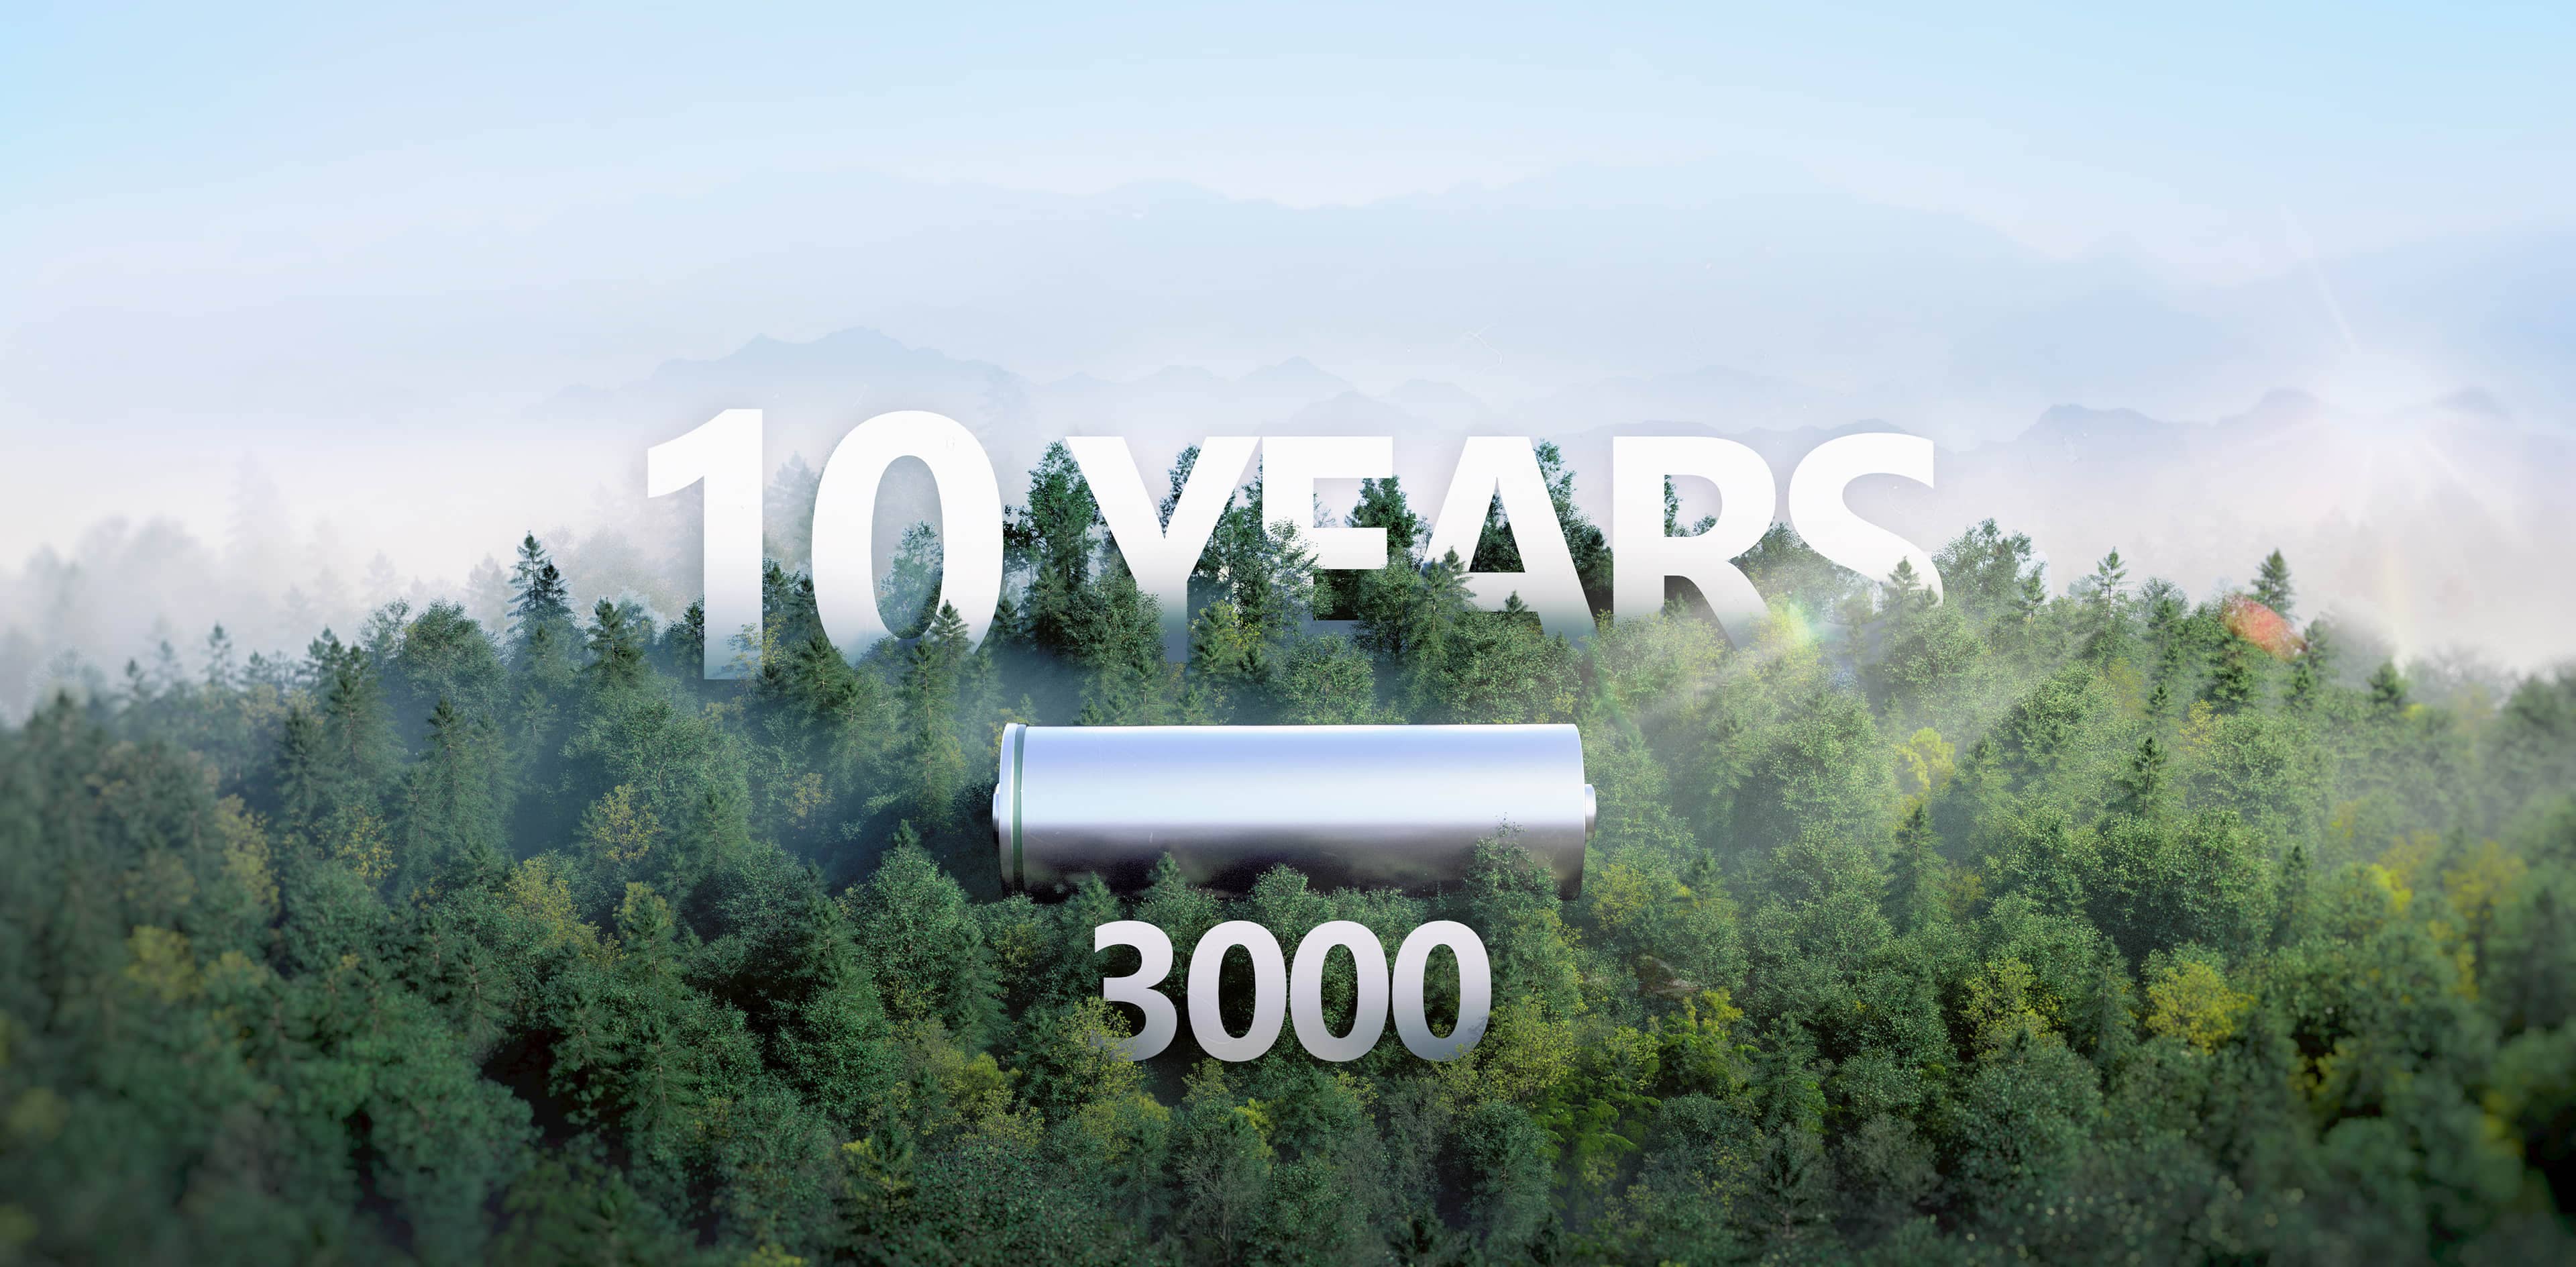 10-year long-lasting
LFP battery